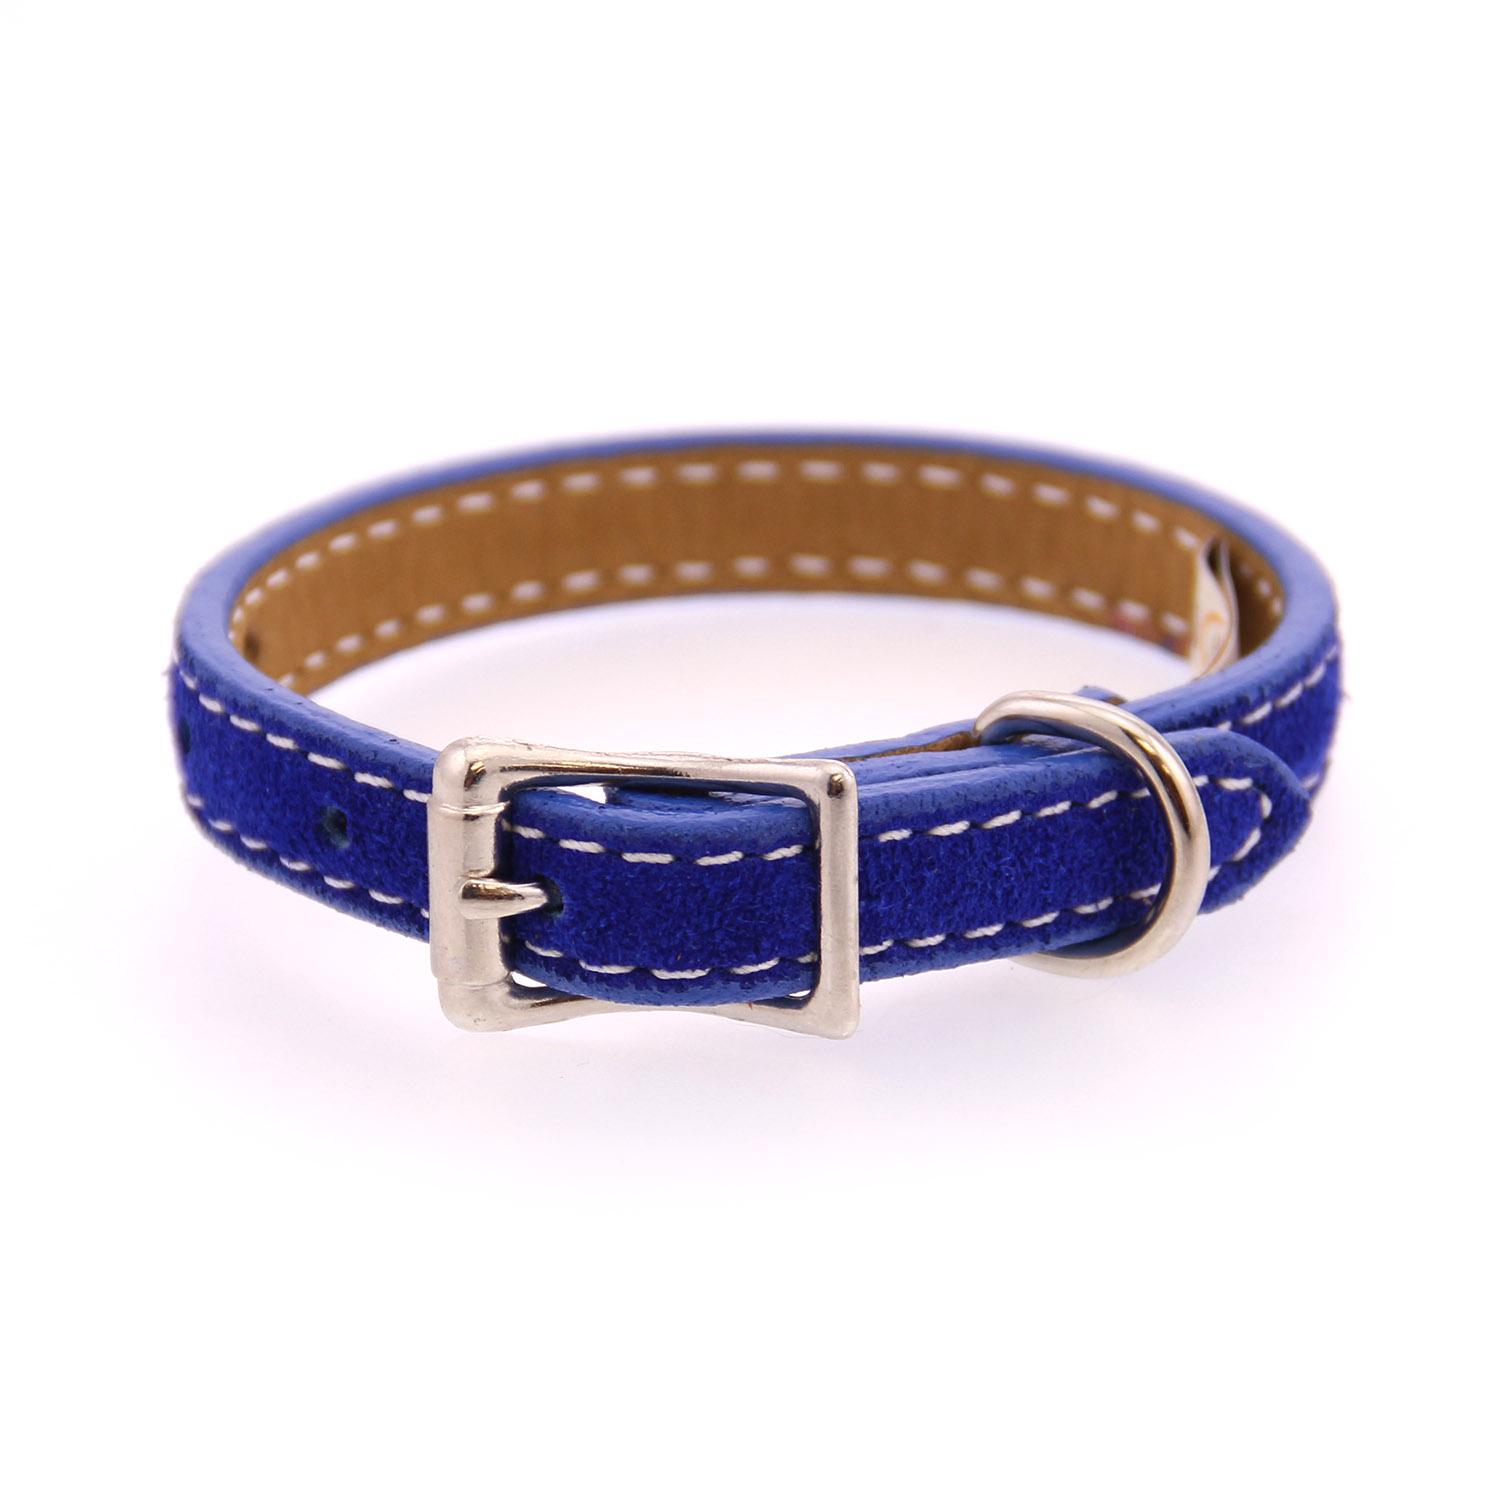 Saratoga Suede Leather Dog Collar by Auburn Leather - Blue